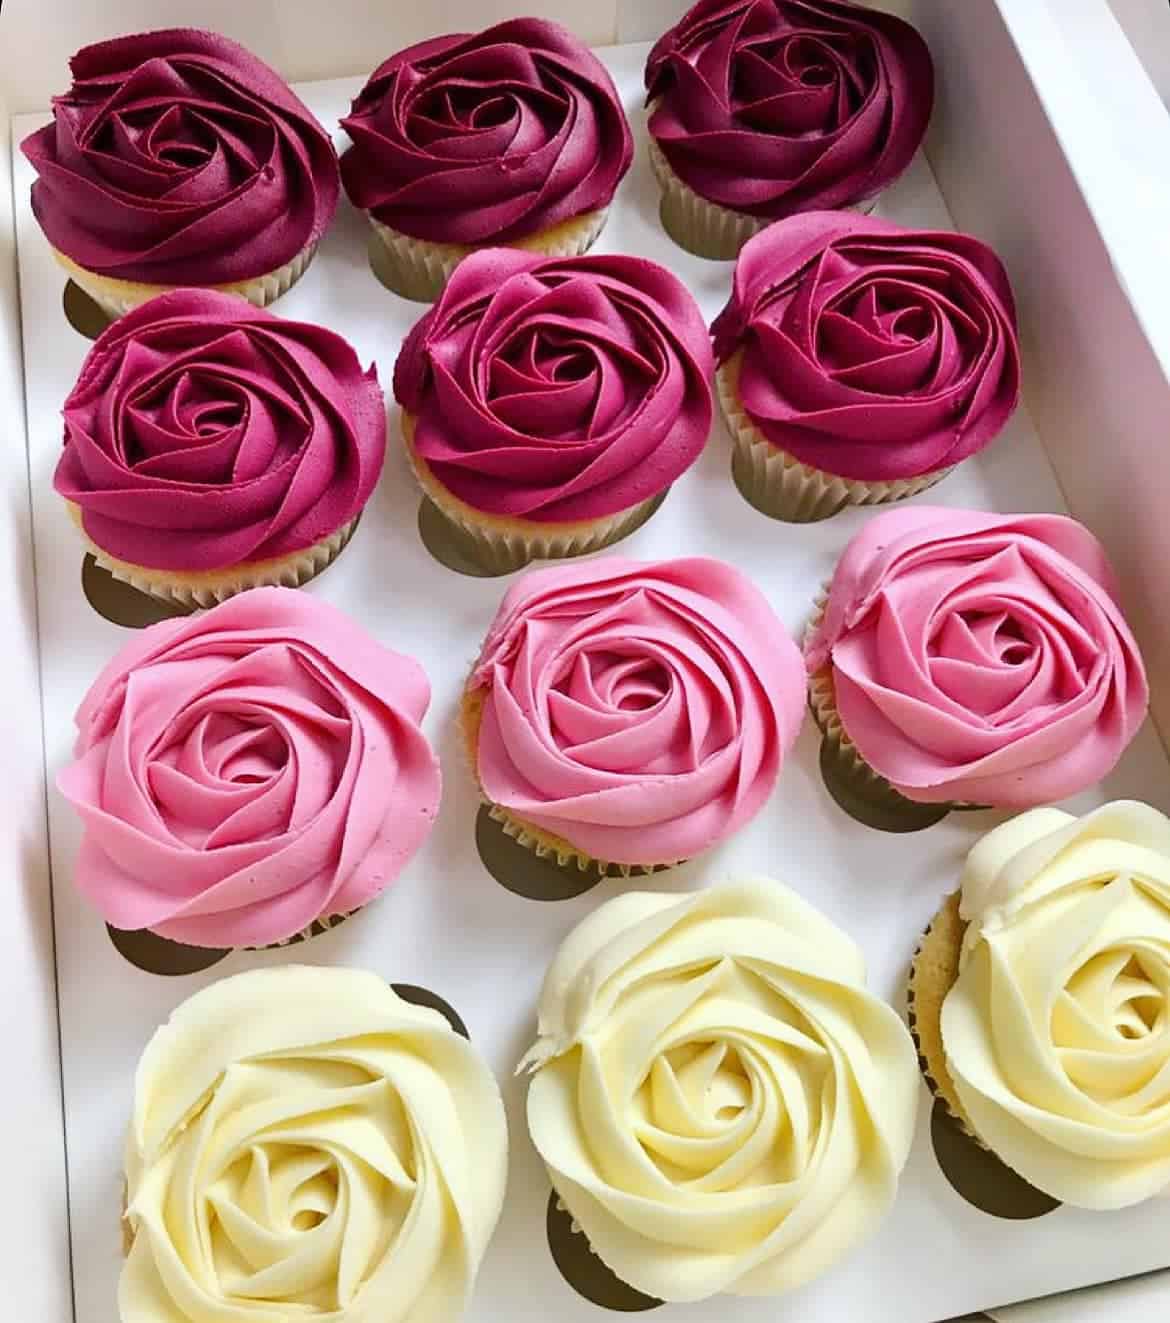 May be an image of cupcake and rose